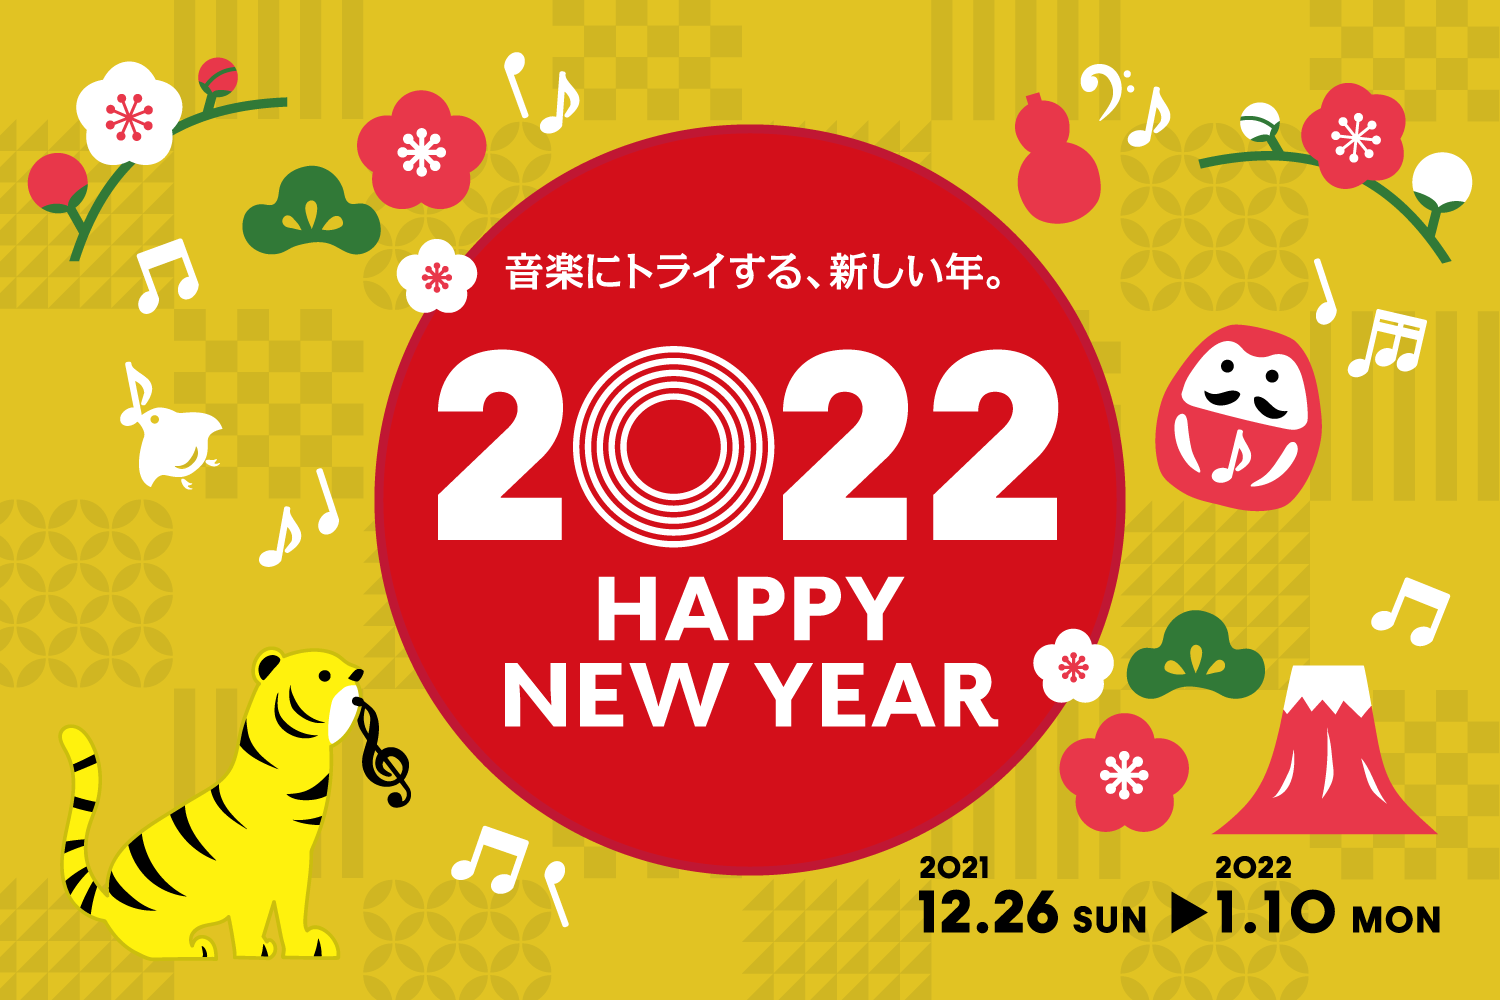 【HAPPY NEW YEAR 2022】お買い得情報 「電子ドラム編」